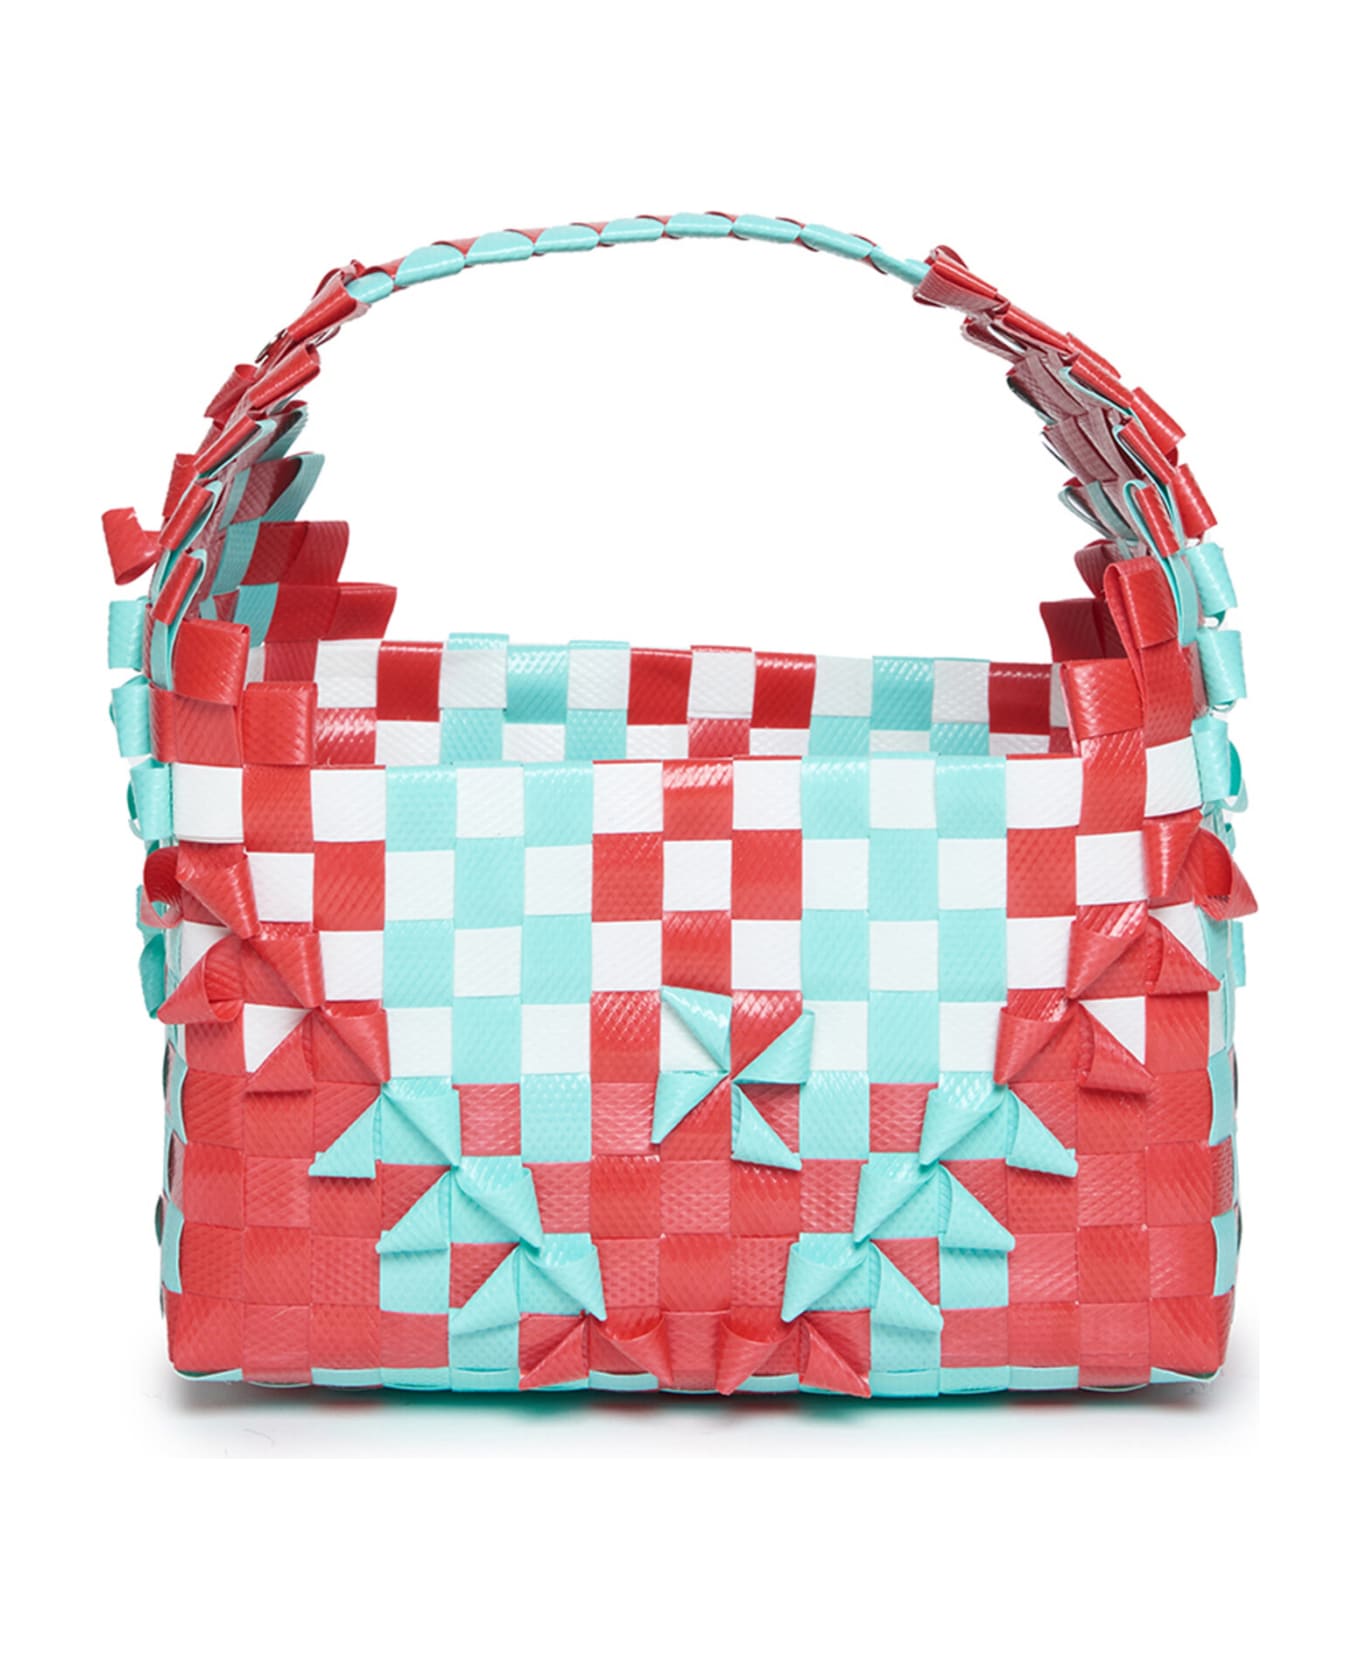 Marni Mw80f Rainbow Bag Bags Marni Red Woven Rainbow Bag With Single Handle And Applied Logo - Ibiscus